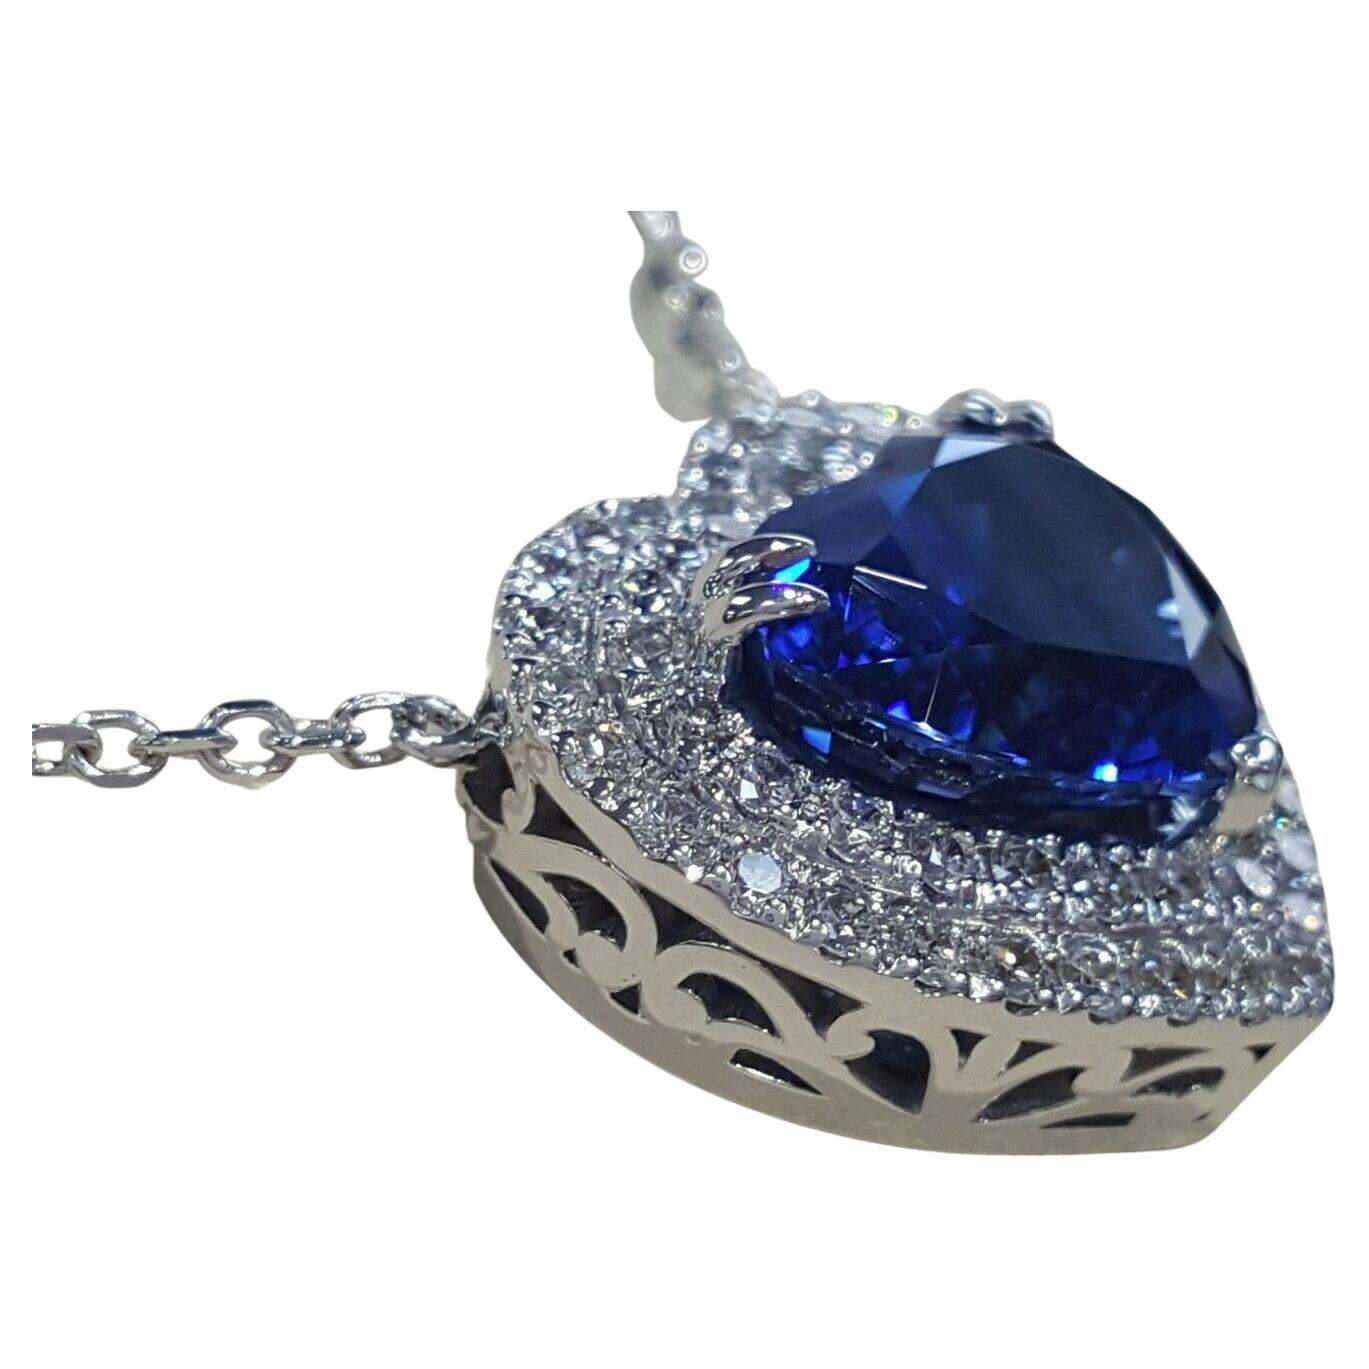 6.02 carat Heart Shaped Blue Sapphire Pendant
6.02 carat Heart Shaped Blue Sapphire with set in a handmade Platinum Pendant



